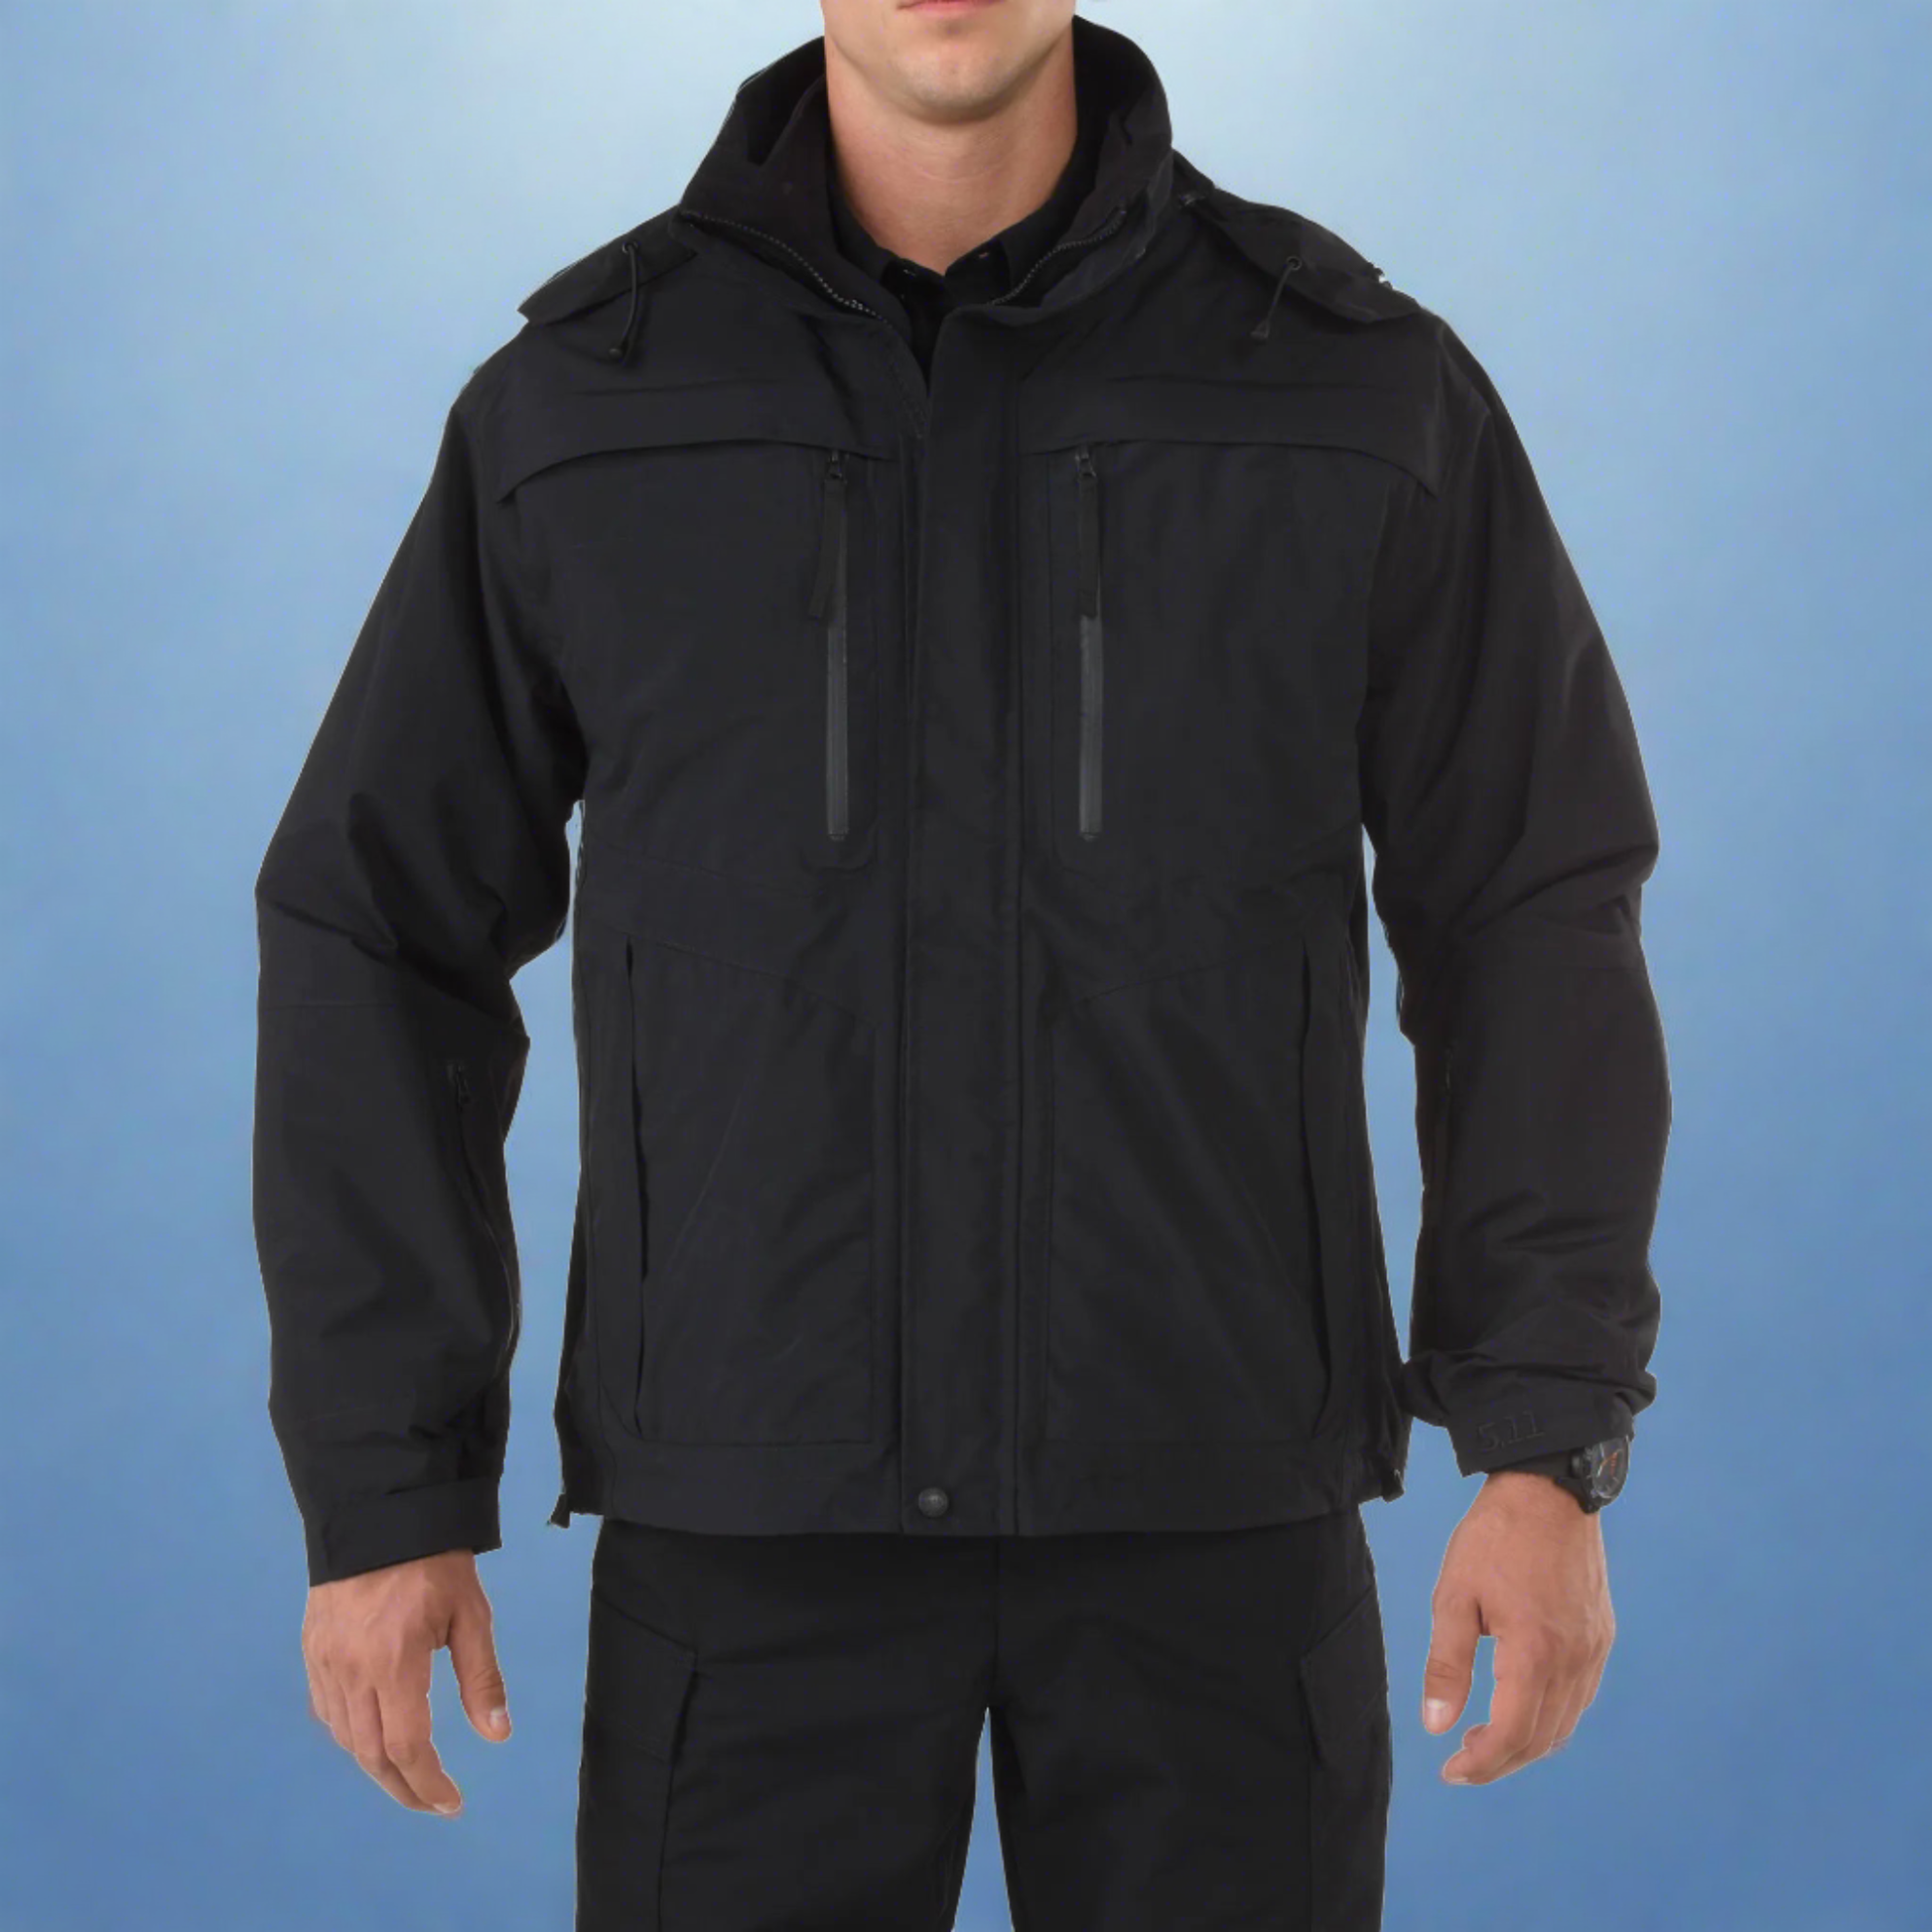 Outerwear - 5.11 Tactical Valiant Duty Jacket: 5-in-1